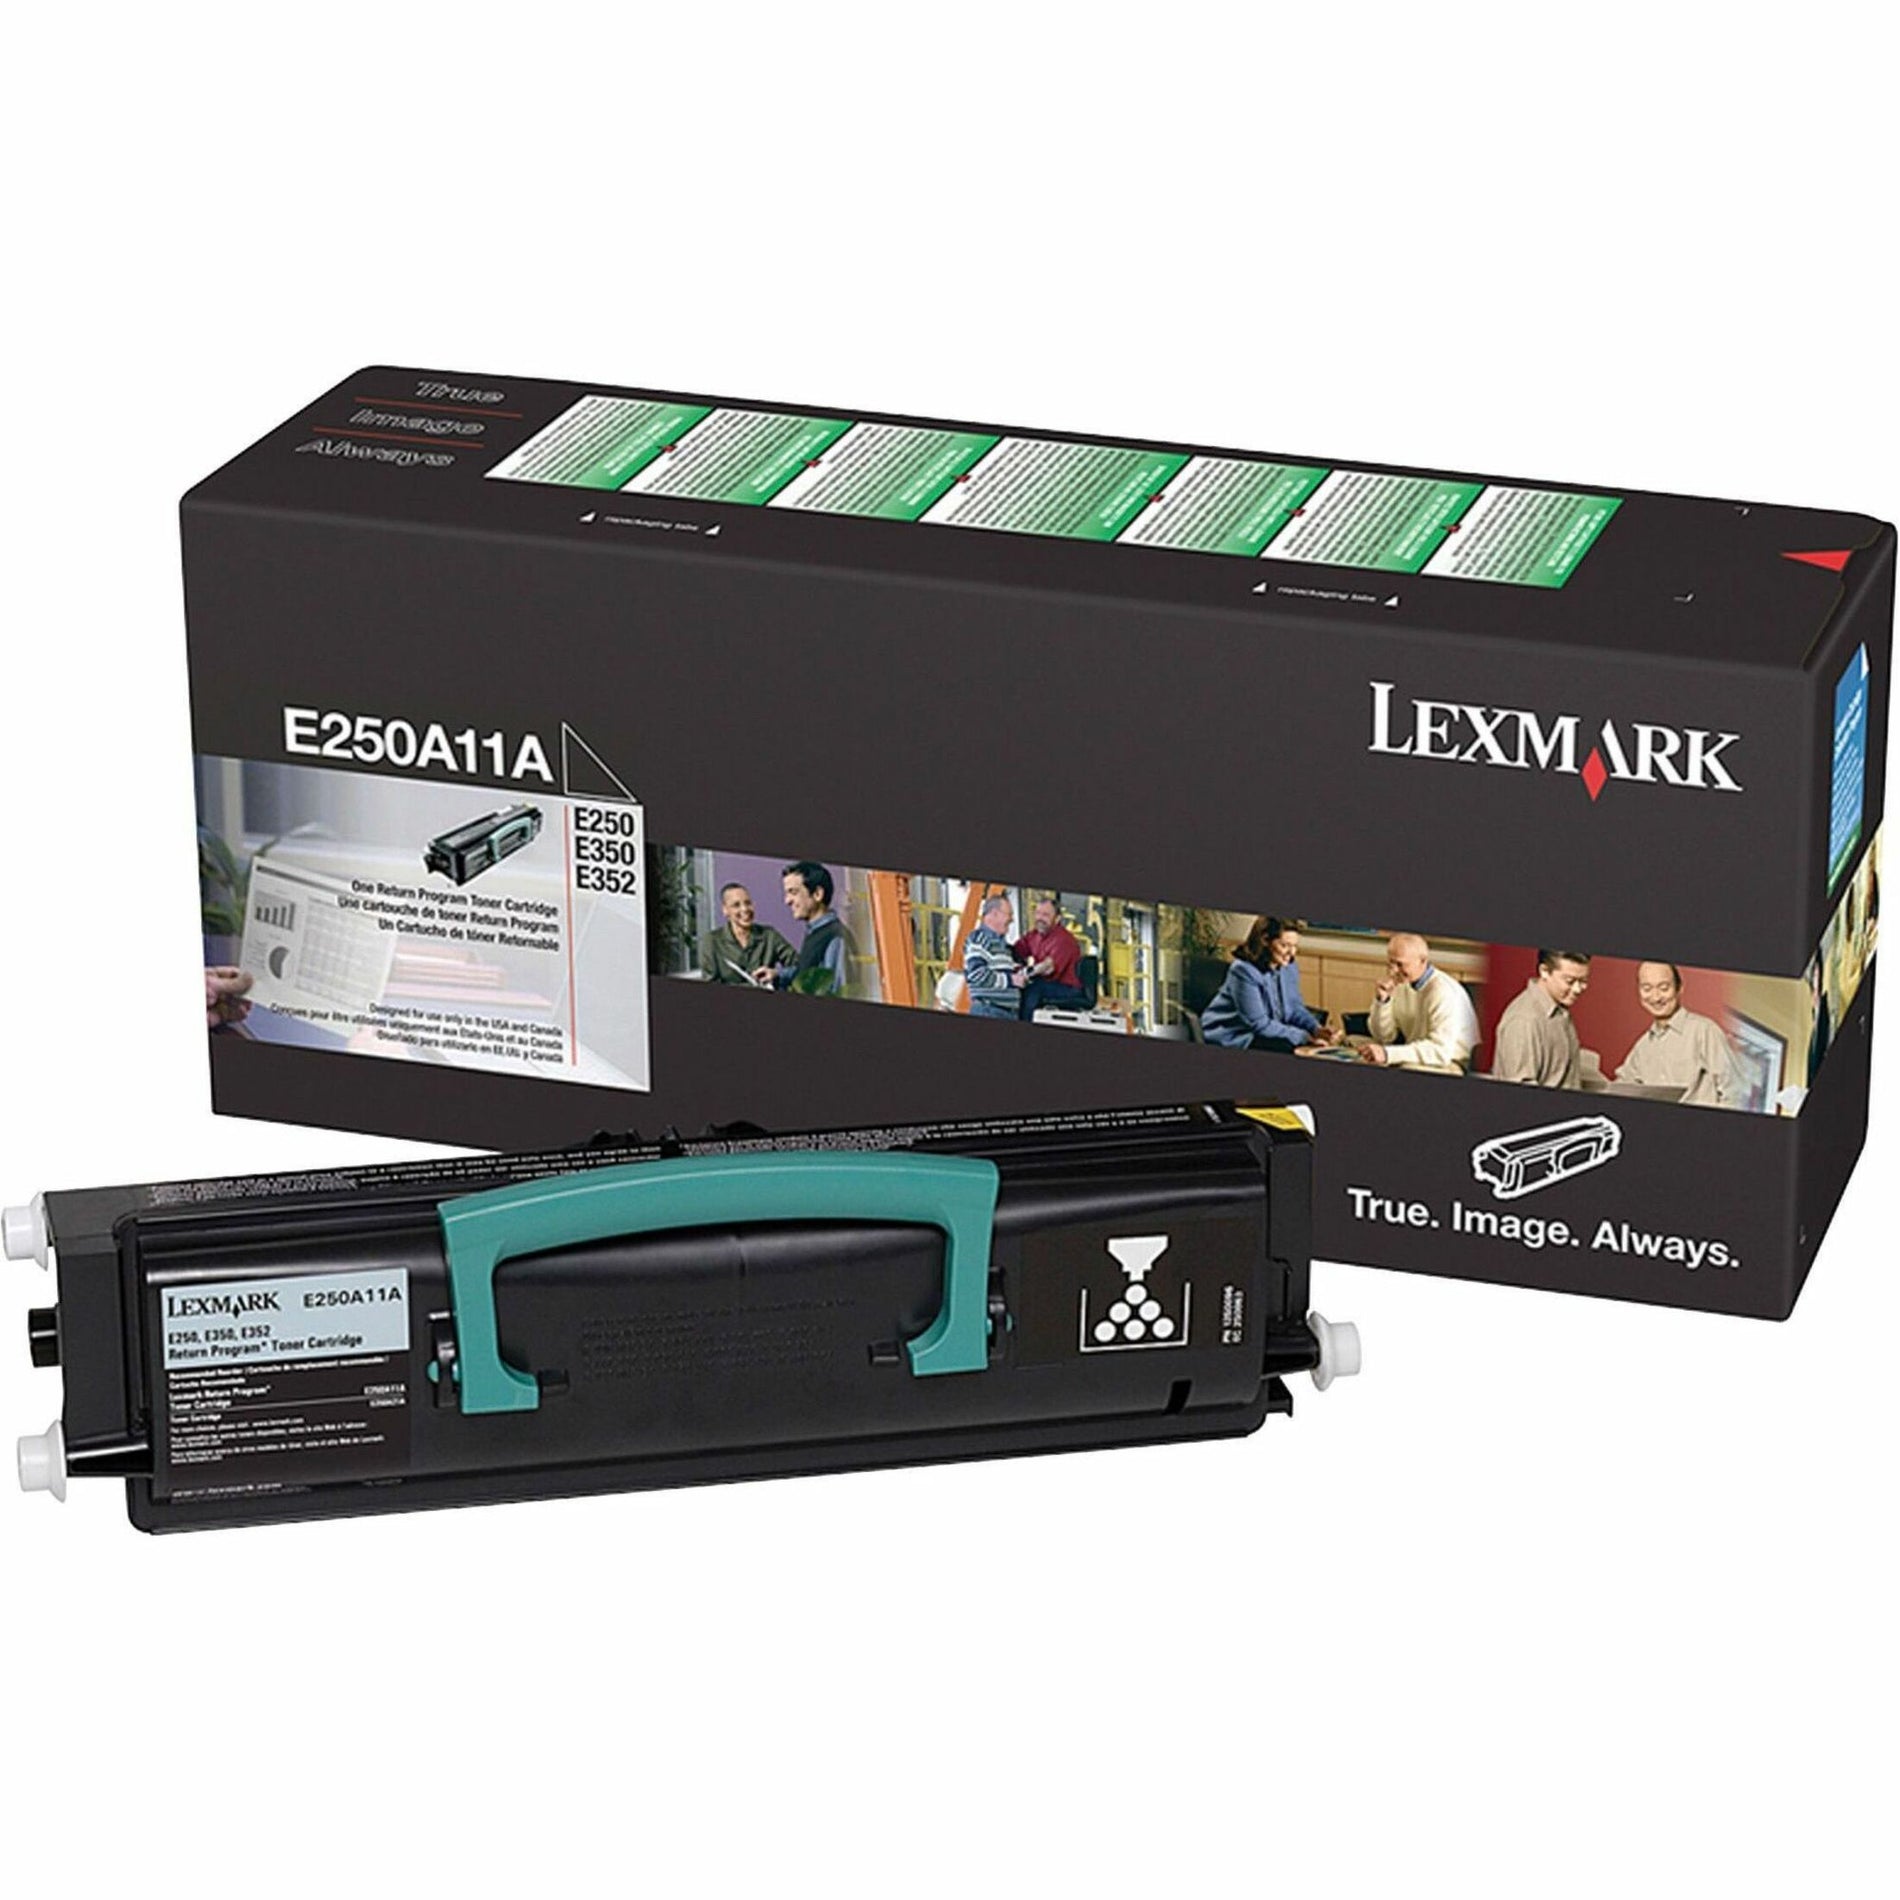 Lexmark E250A11A Toner Cartridge, 3500 Page Yield, Black